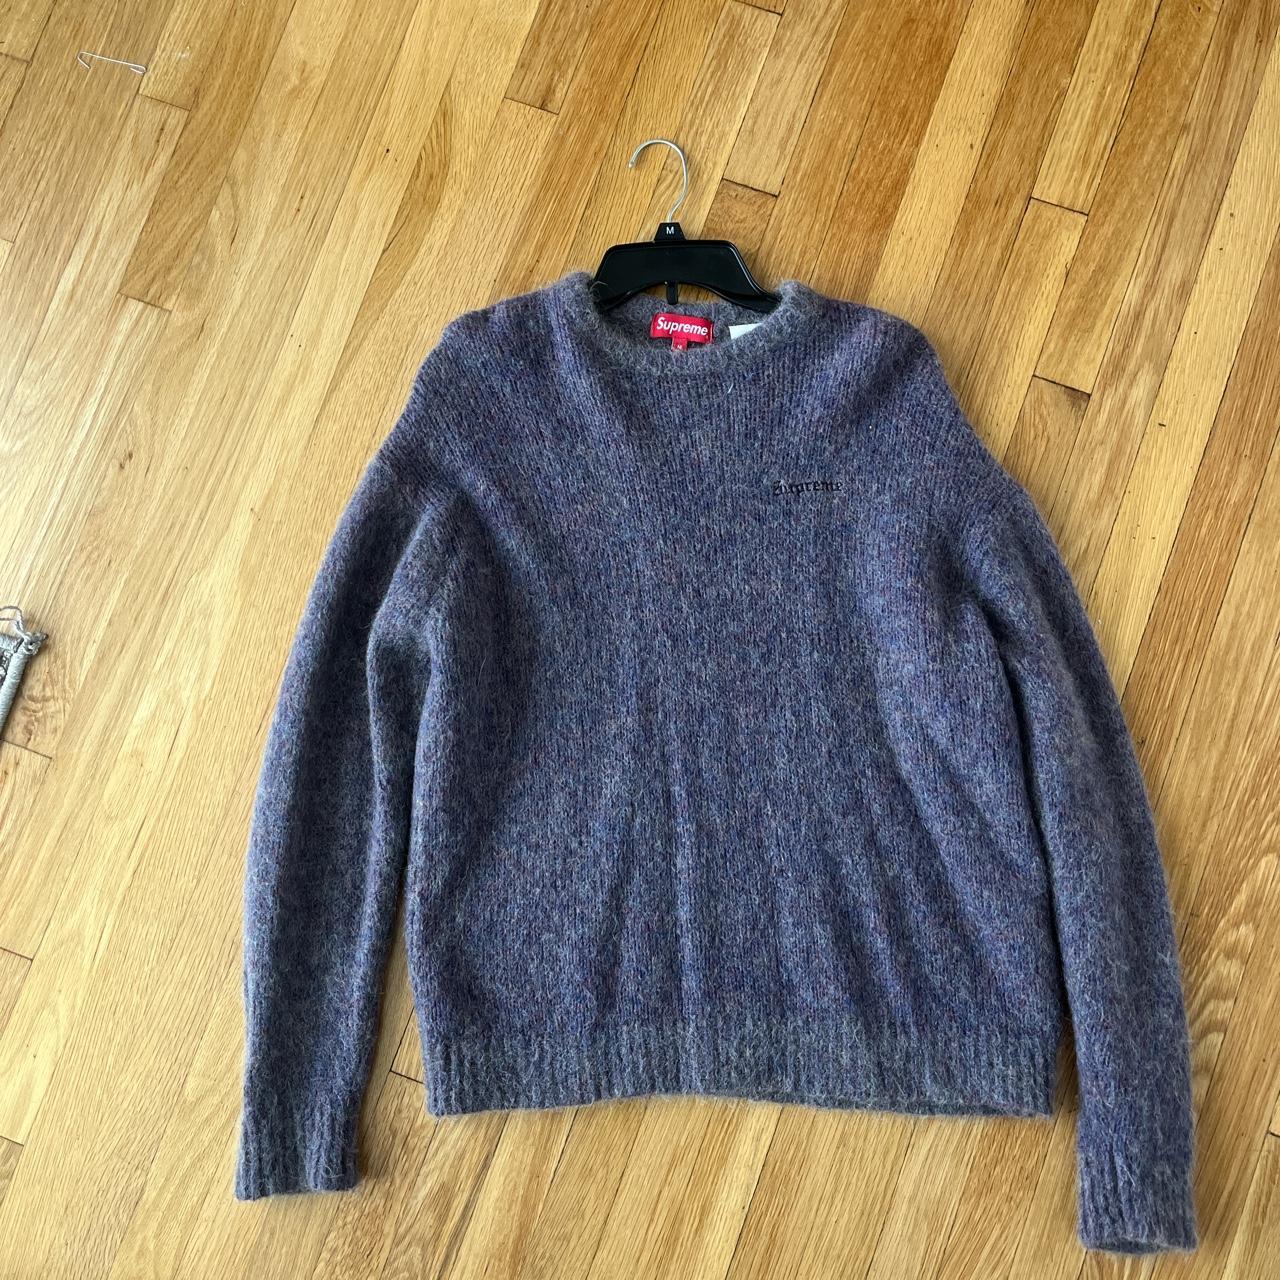 Supreme mohair-sweater - Depop